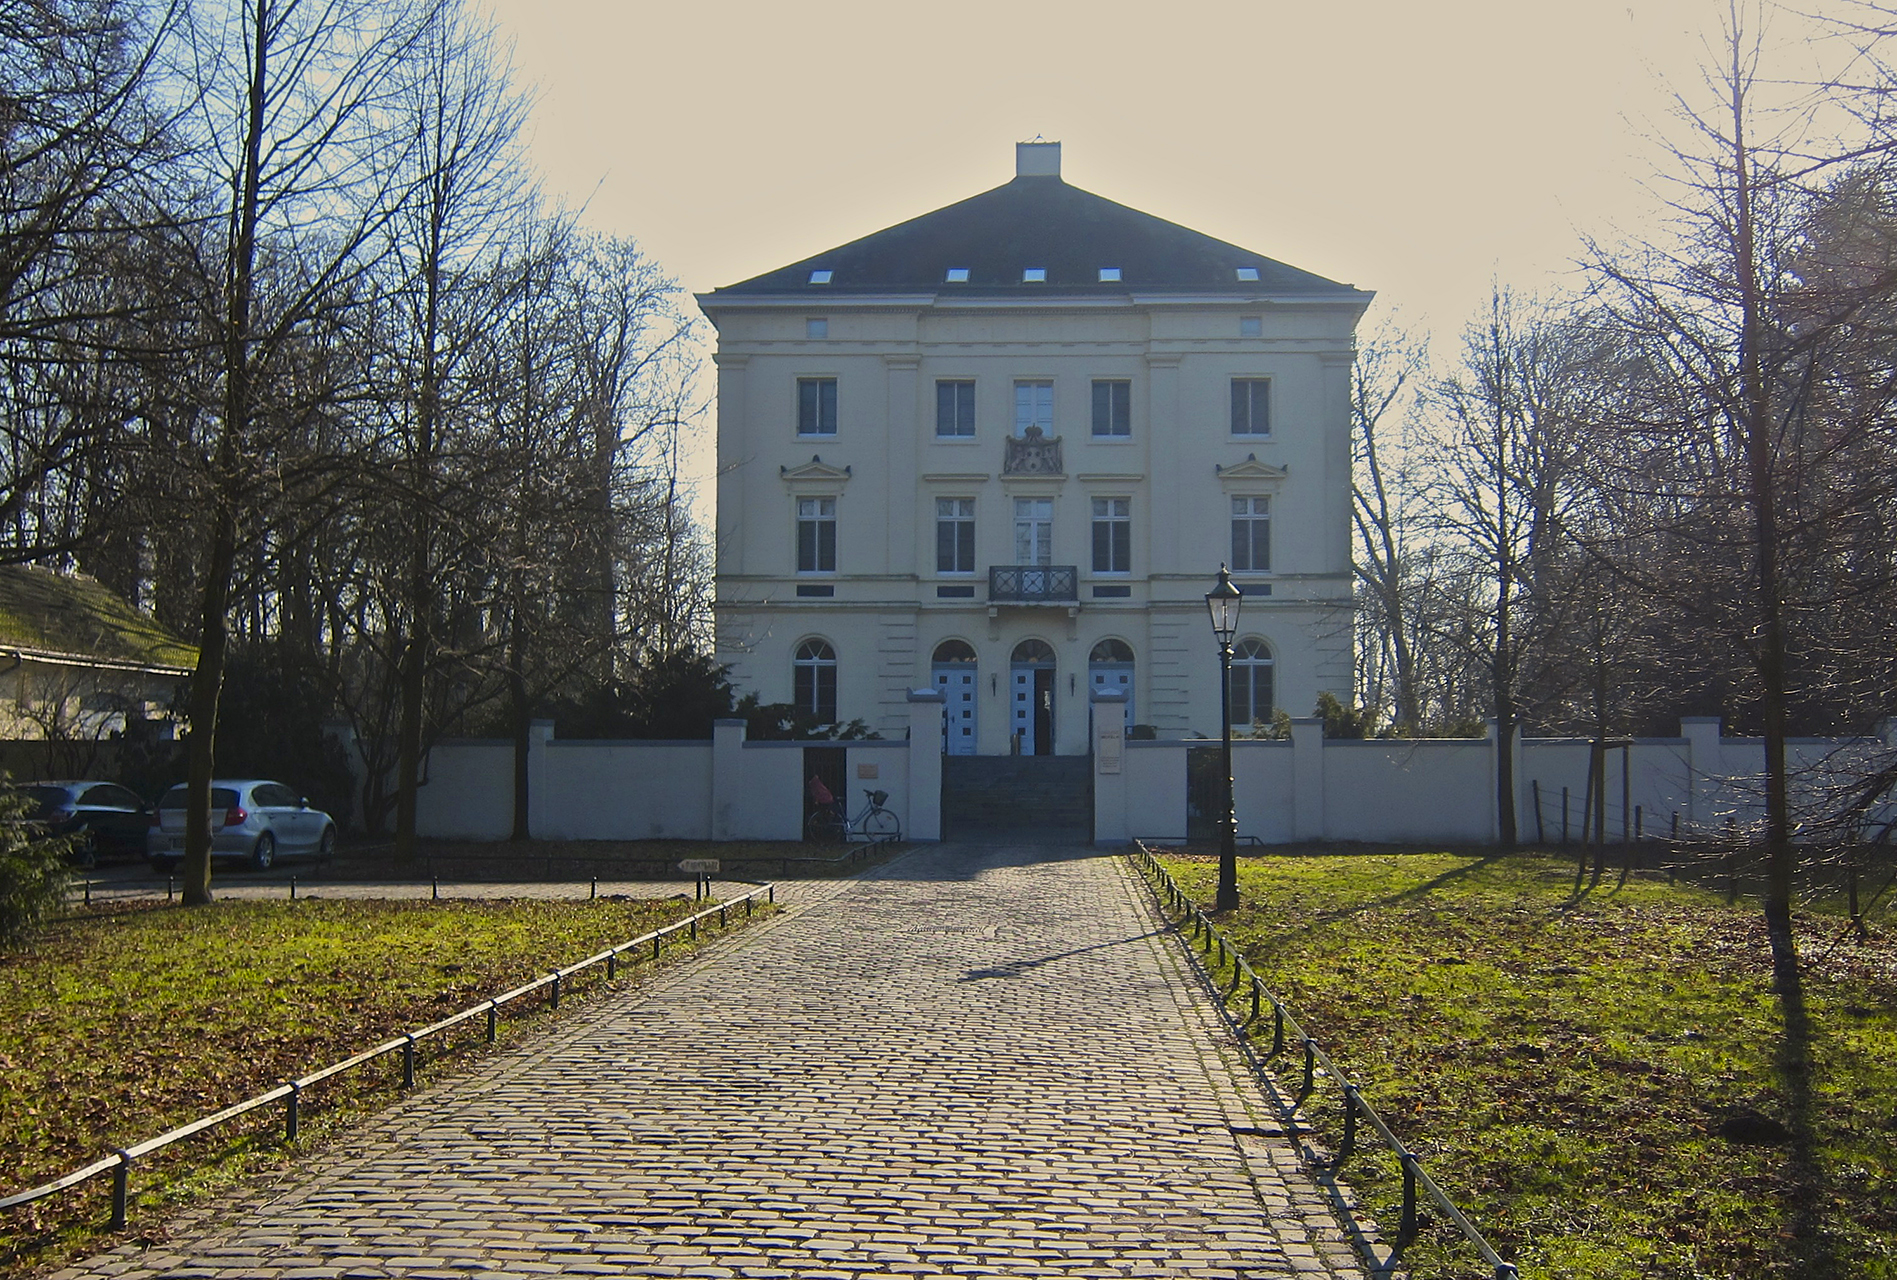 Schloß Mickeln manor house